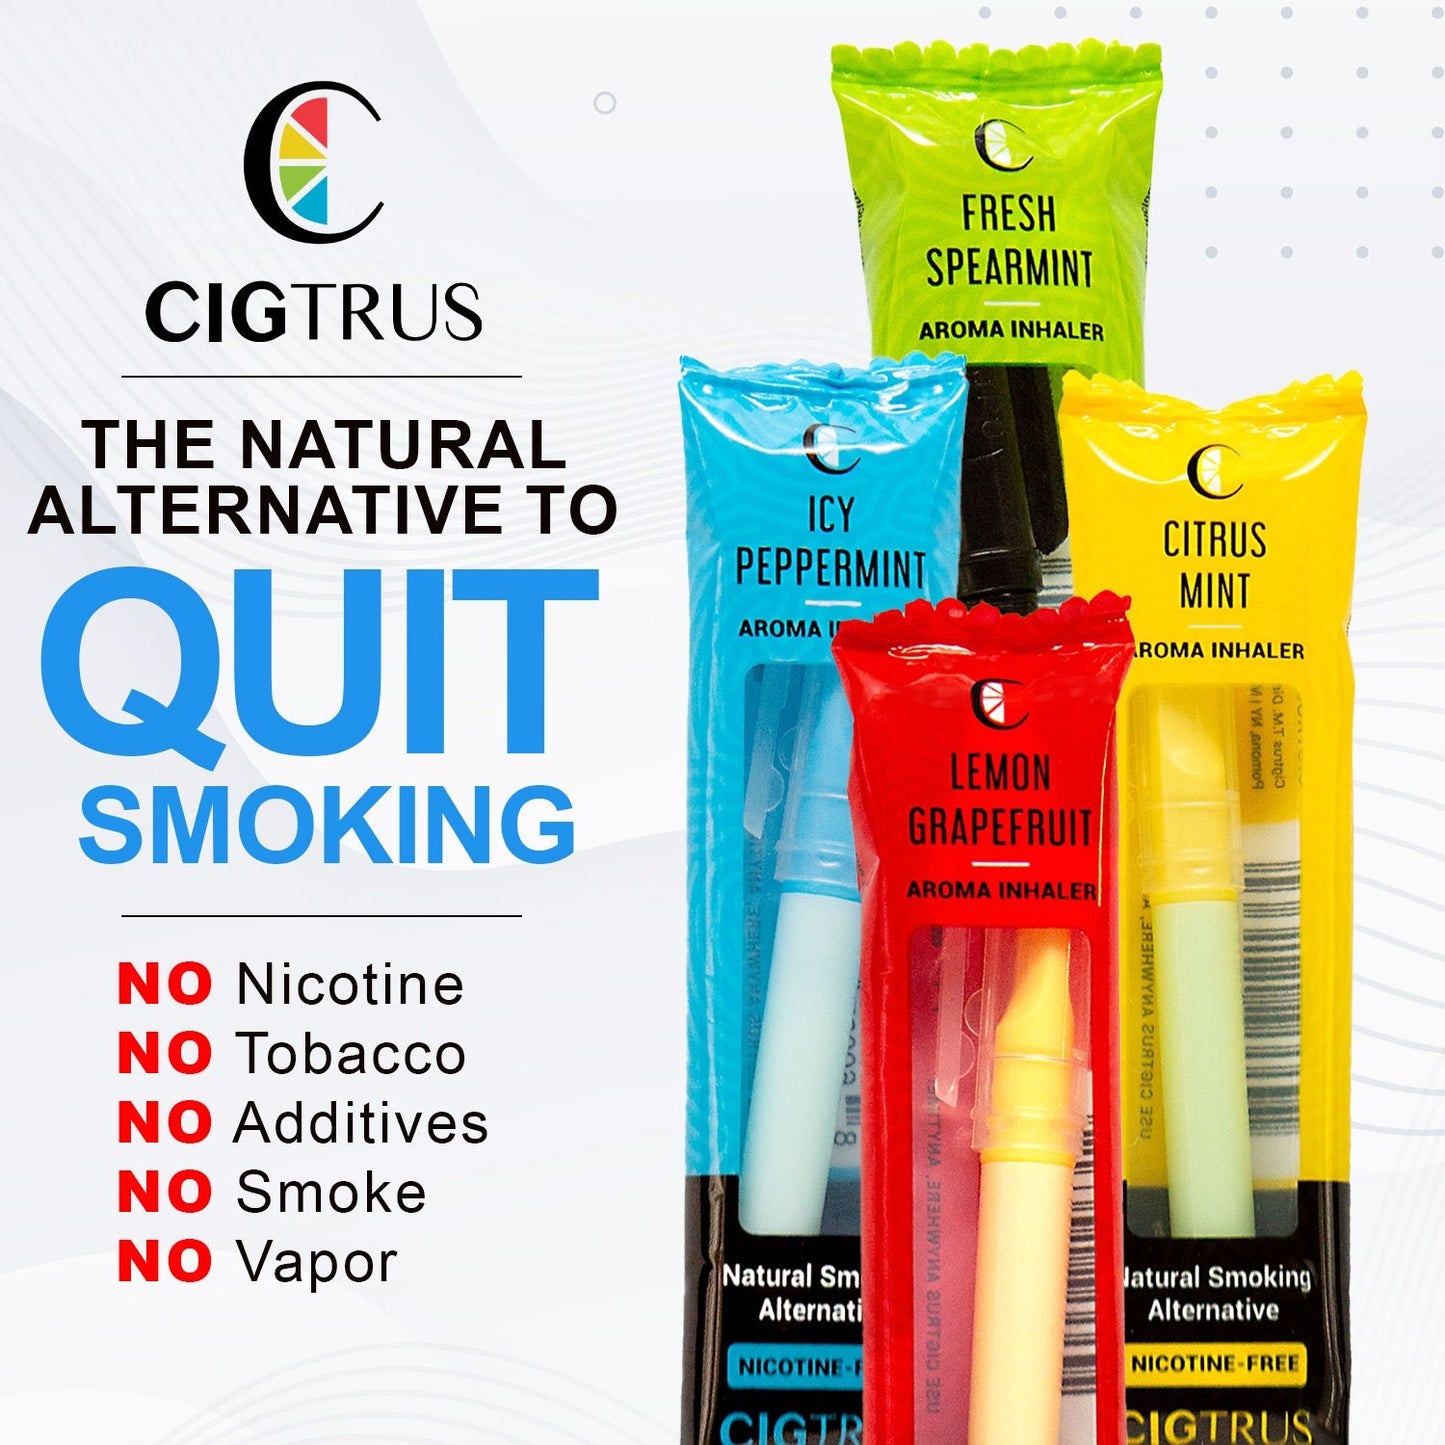 Cigtrus Smokeless Oxygen Air Inhaler Oral Fixation Relief Natural Quit Aid Behavioral Support – Pick Your Flavor - Lemon Grapefruit - cigtrus.comcigtrus.com